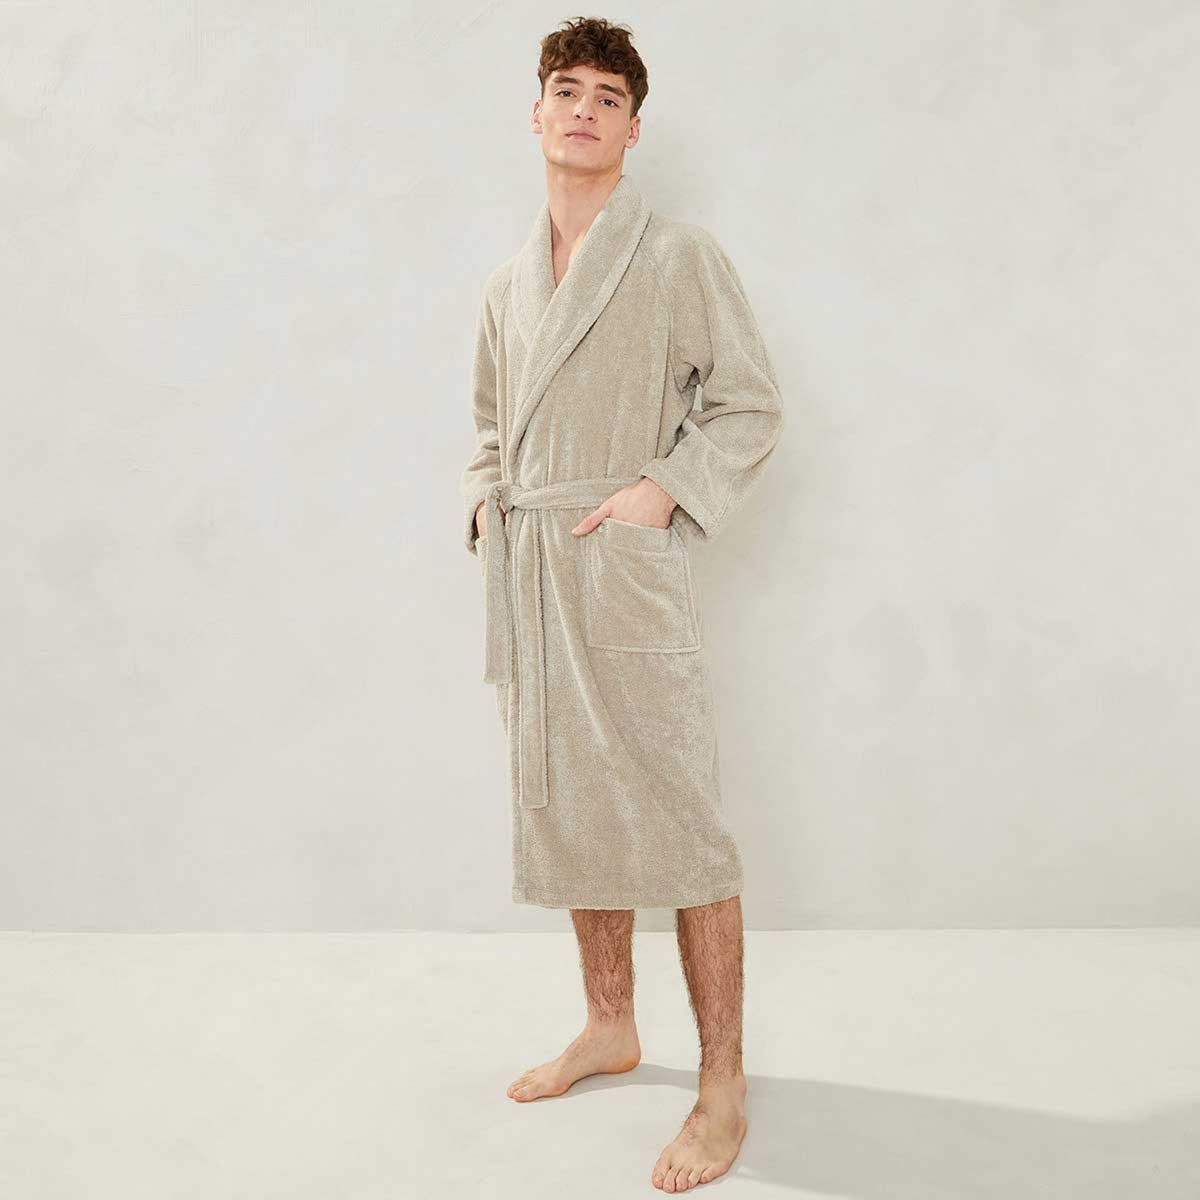 Model Wearing Yves Delorme Etoile Bath Robe in Pierre Color